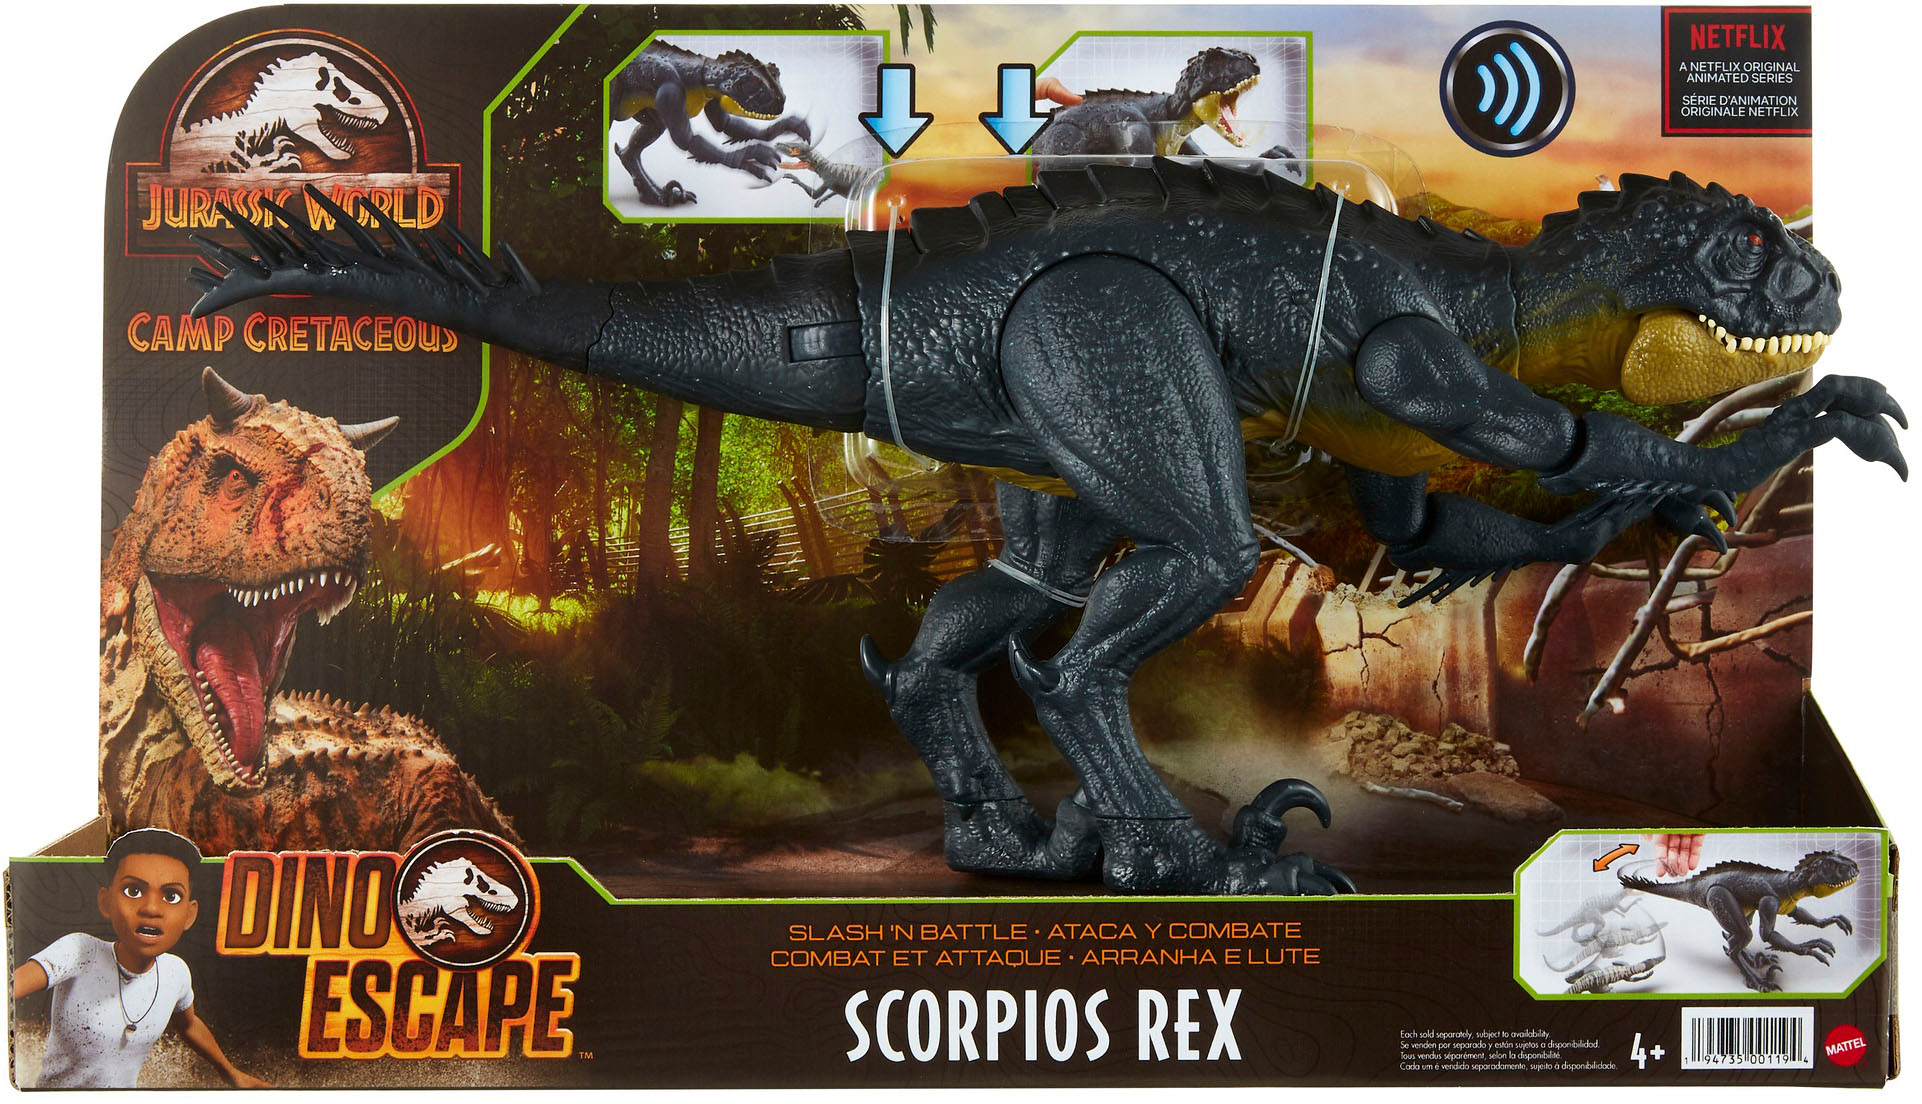 Angle View: Jurassic World - Slash 'N Battle Scorpios Rex